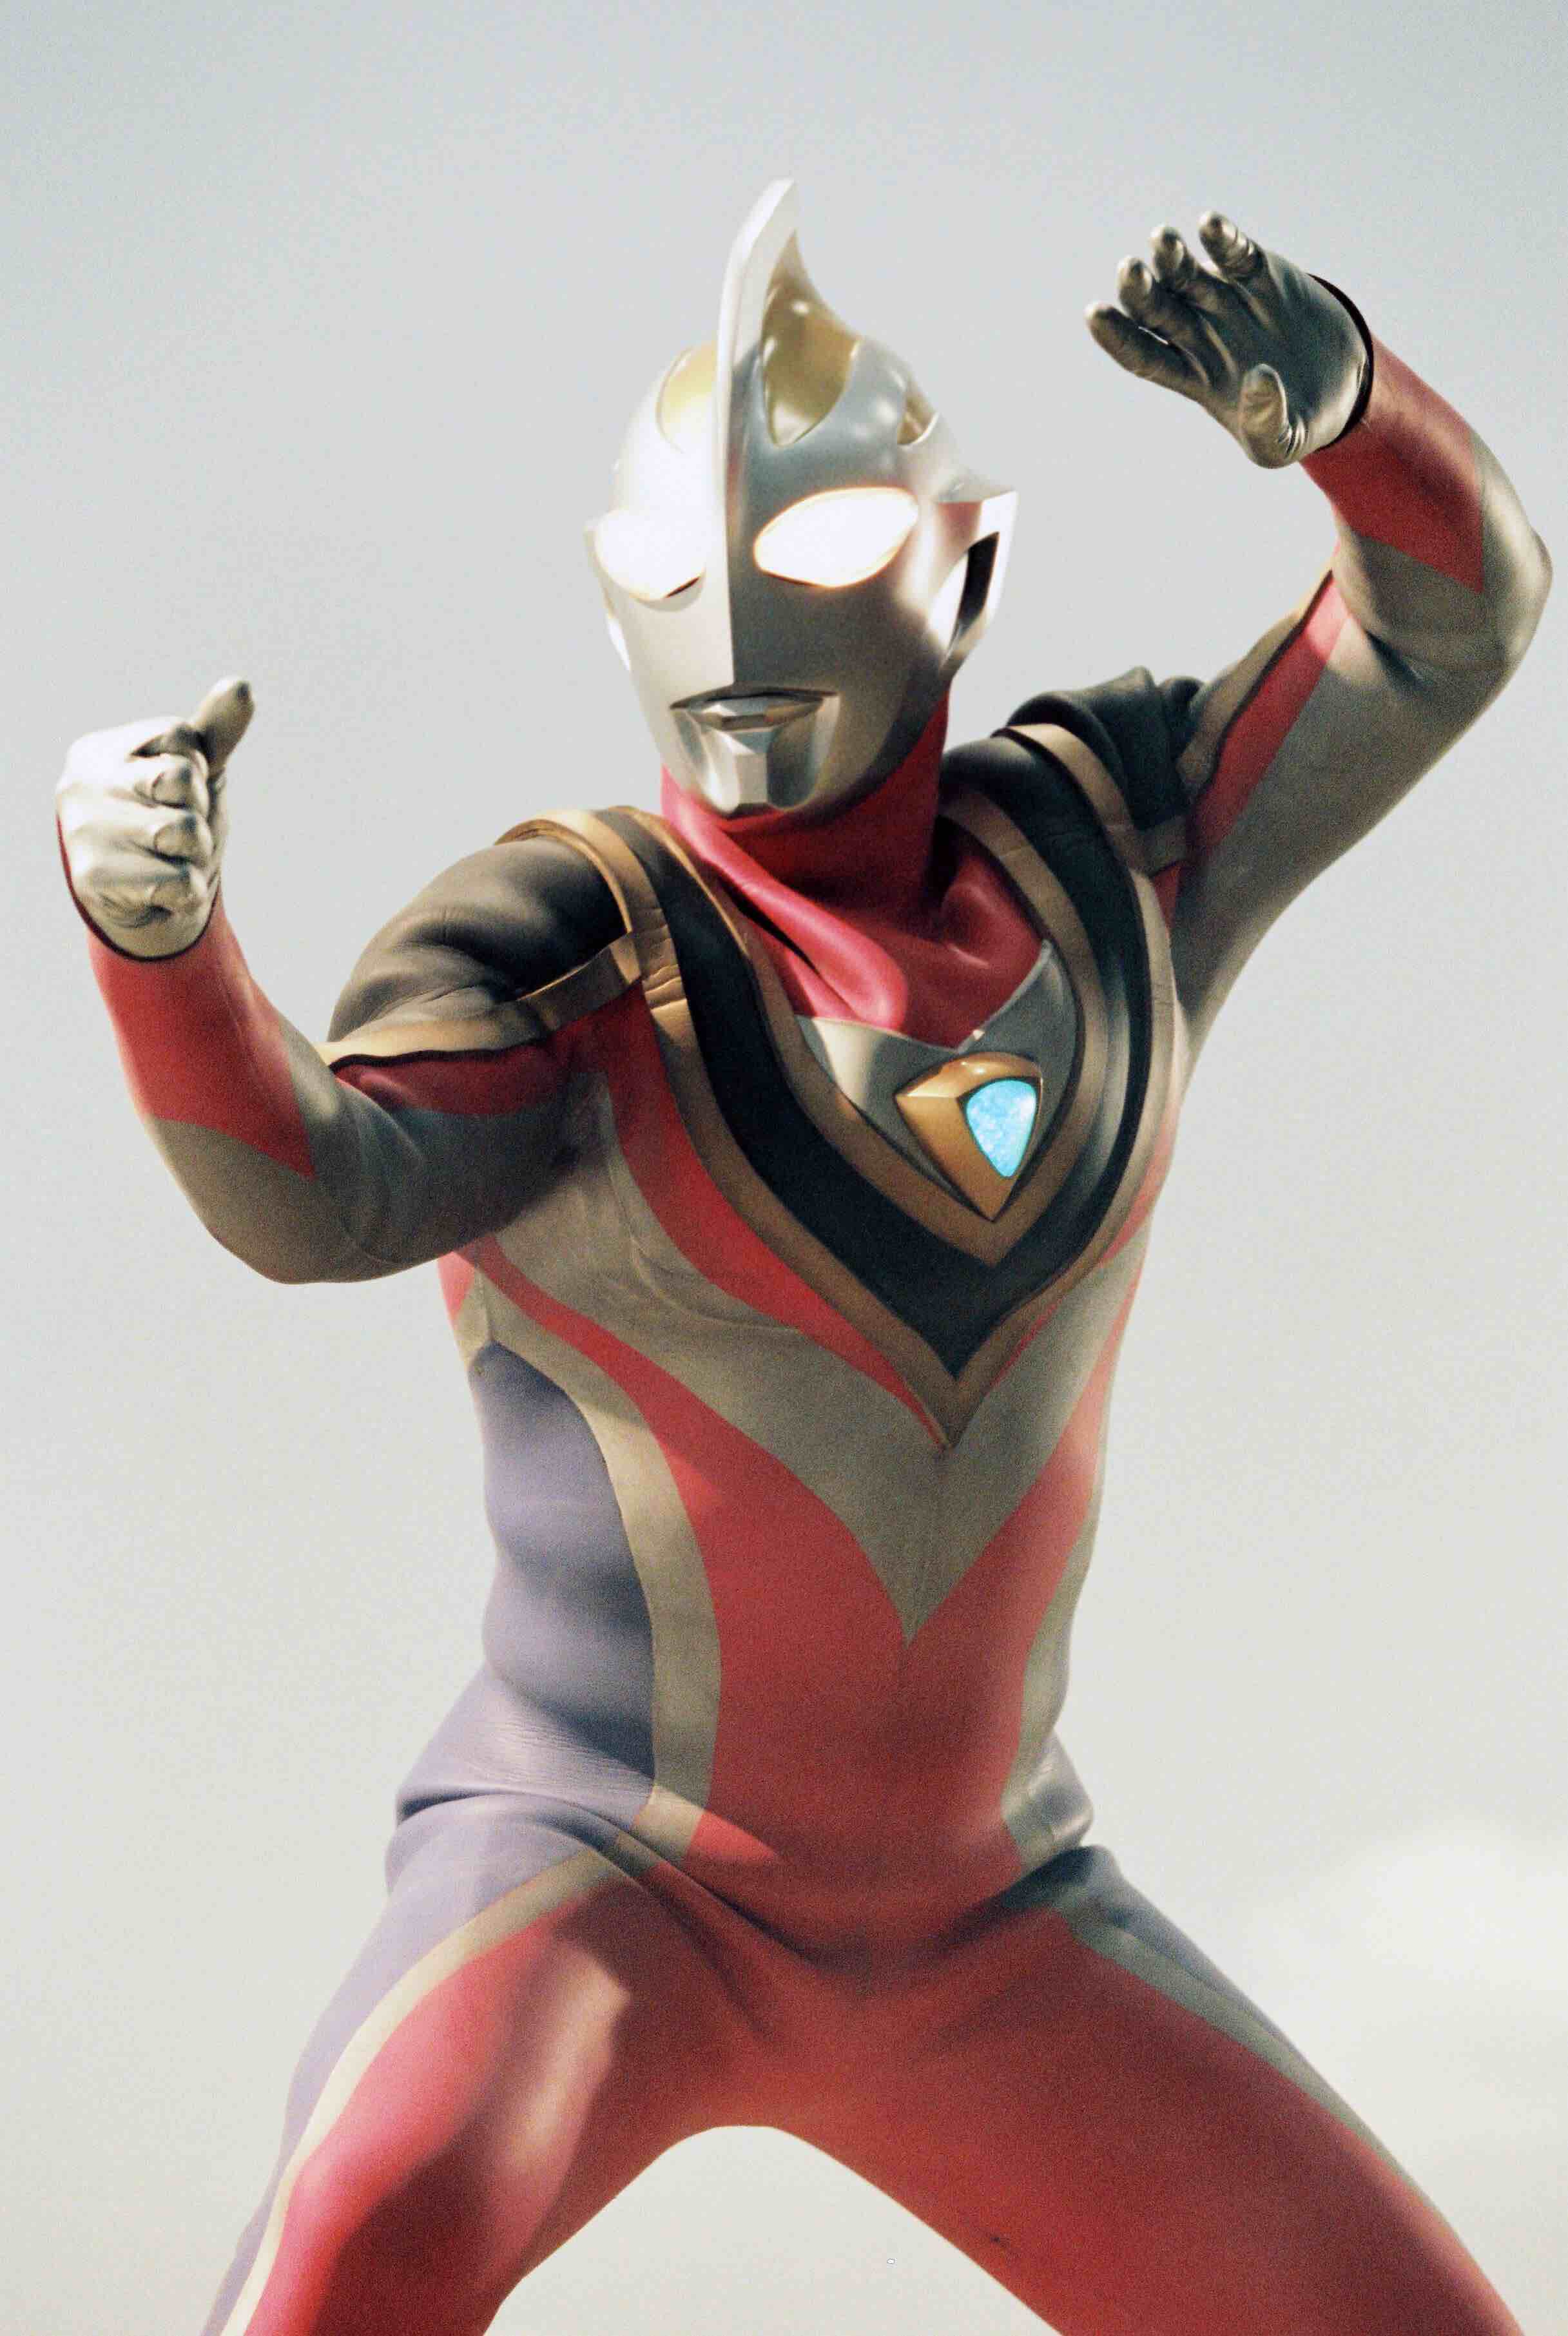 Ultraman Gaia (1998)